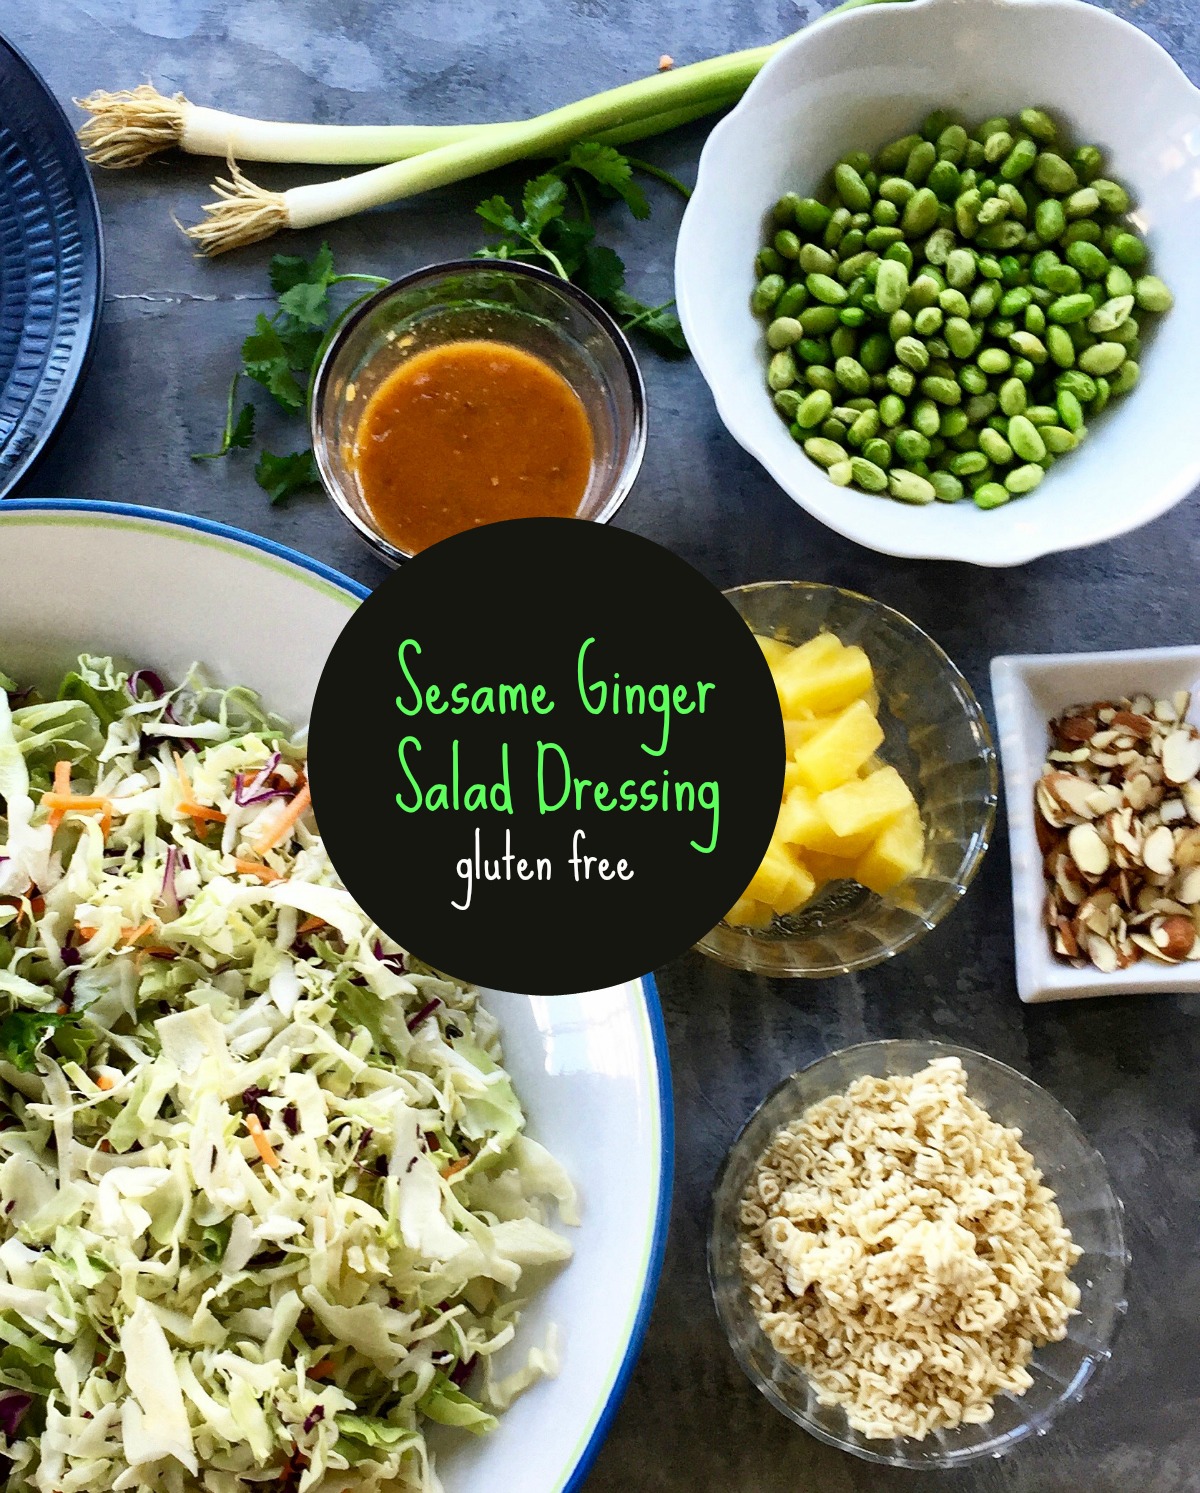 Sesame Ginger Salad Dressing from Spinach TIger